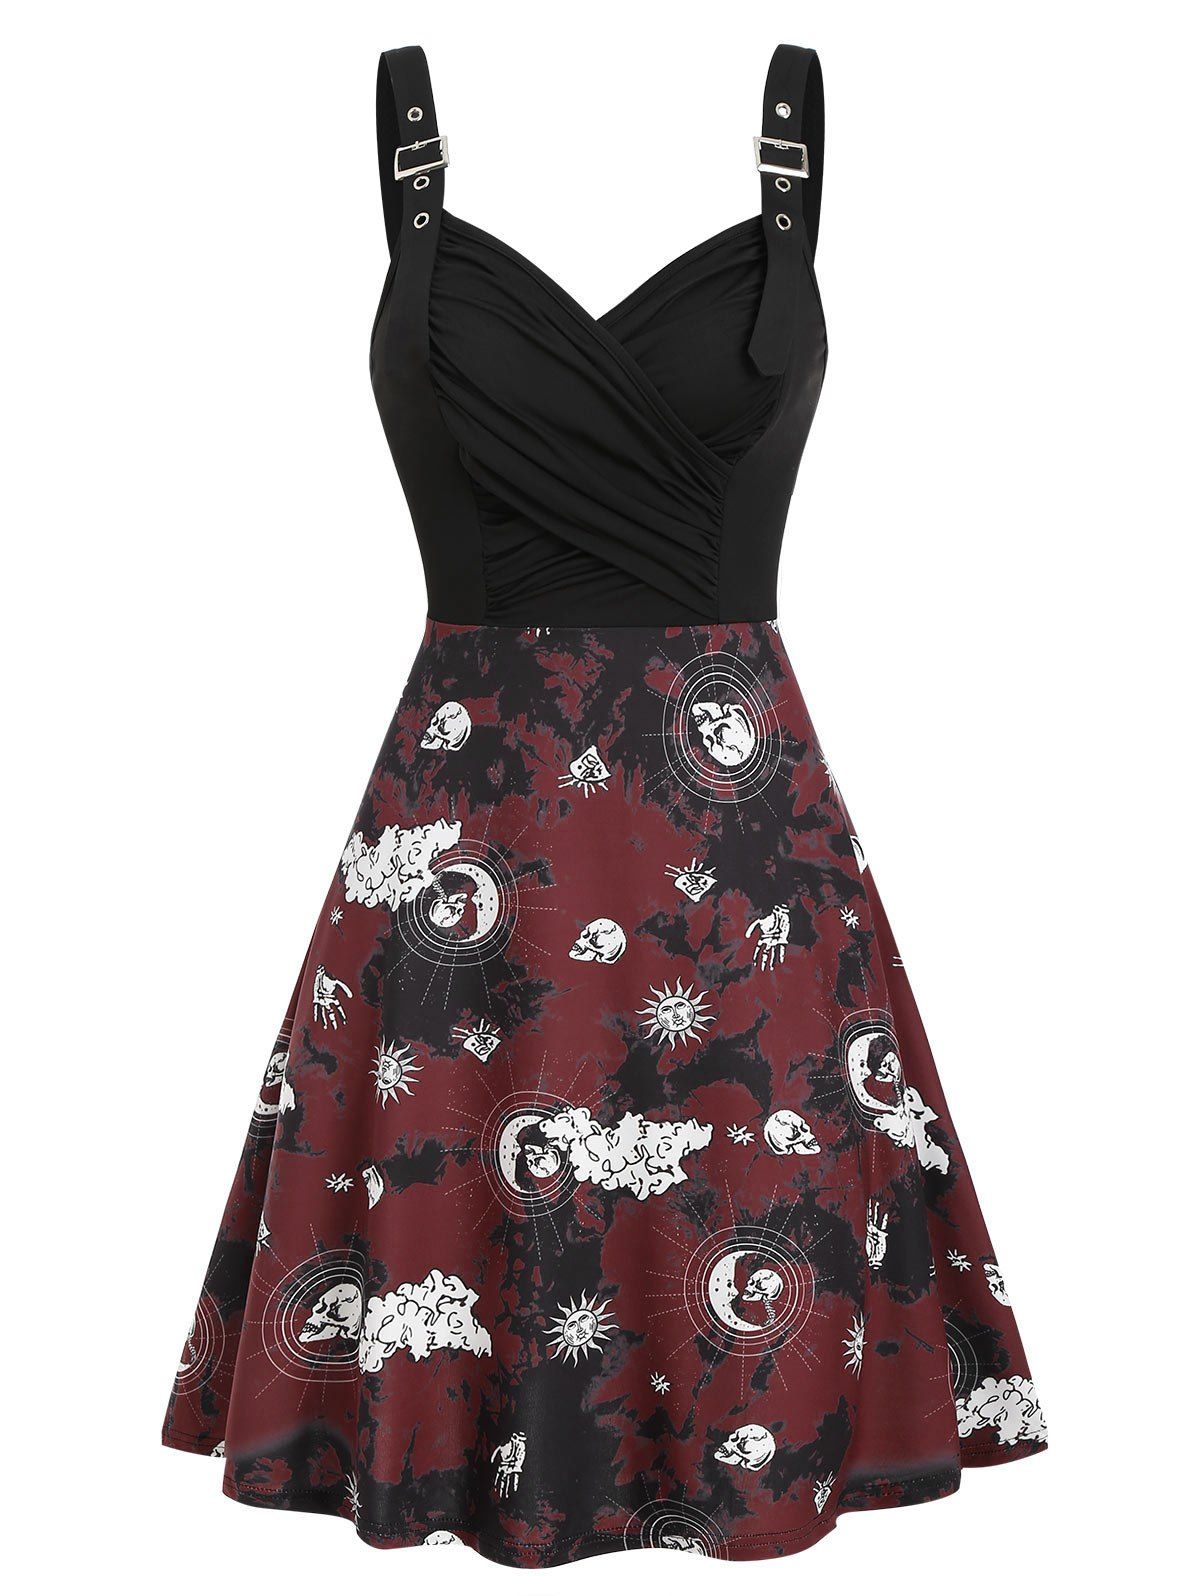 Tie Dye Skull Celestial Sun Moon Gothic A Line Mini Dress Print Ruched Surplice Buckles Cami Dress - BLACK M